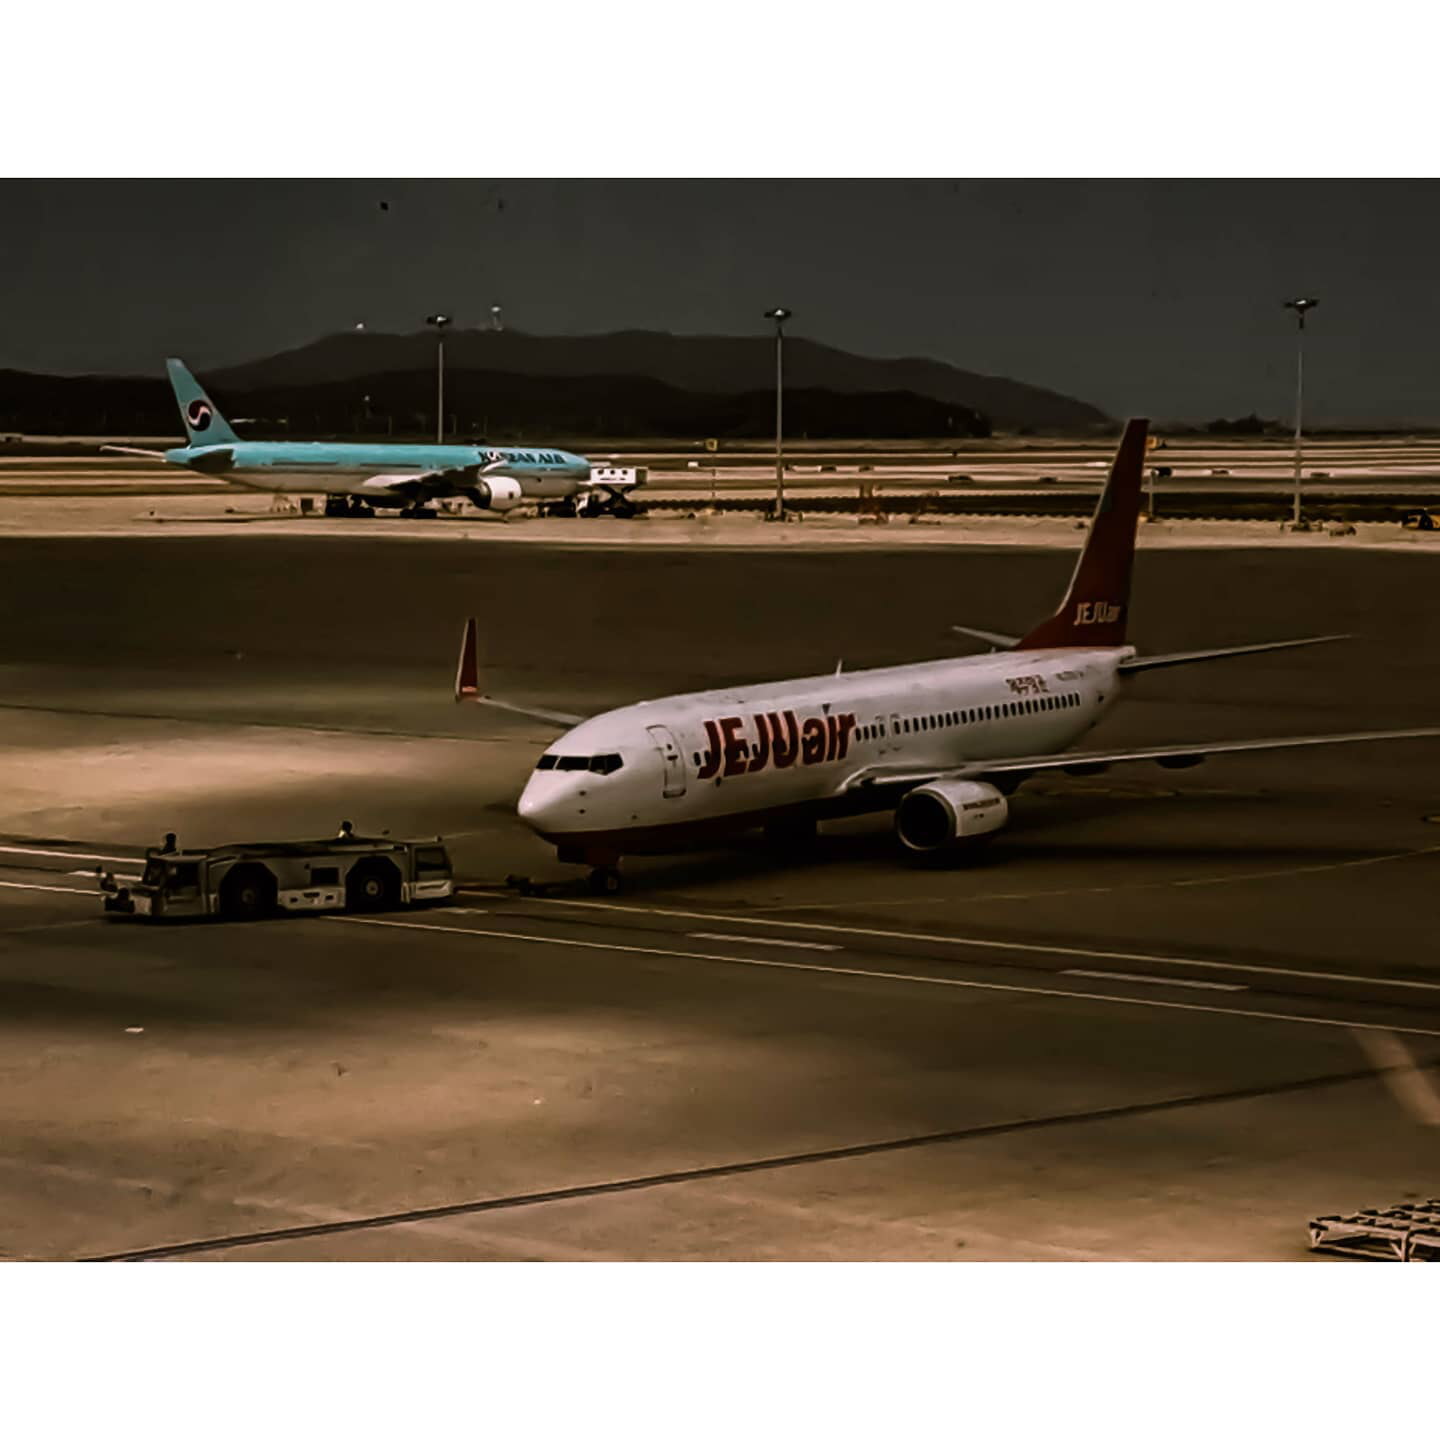 Okinawa havaalanı Araba Kiralama